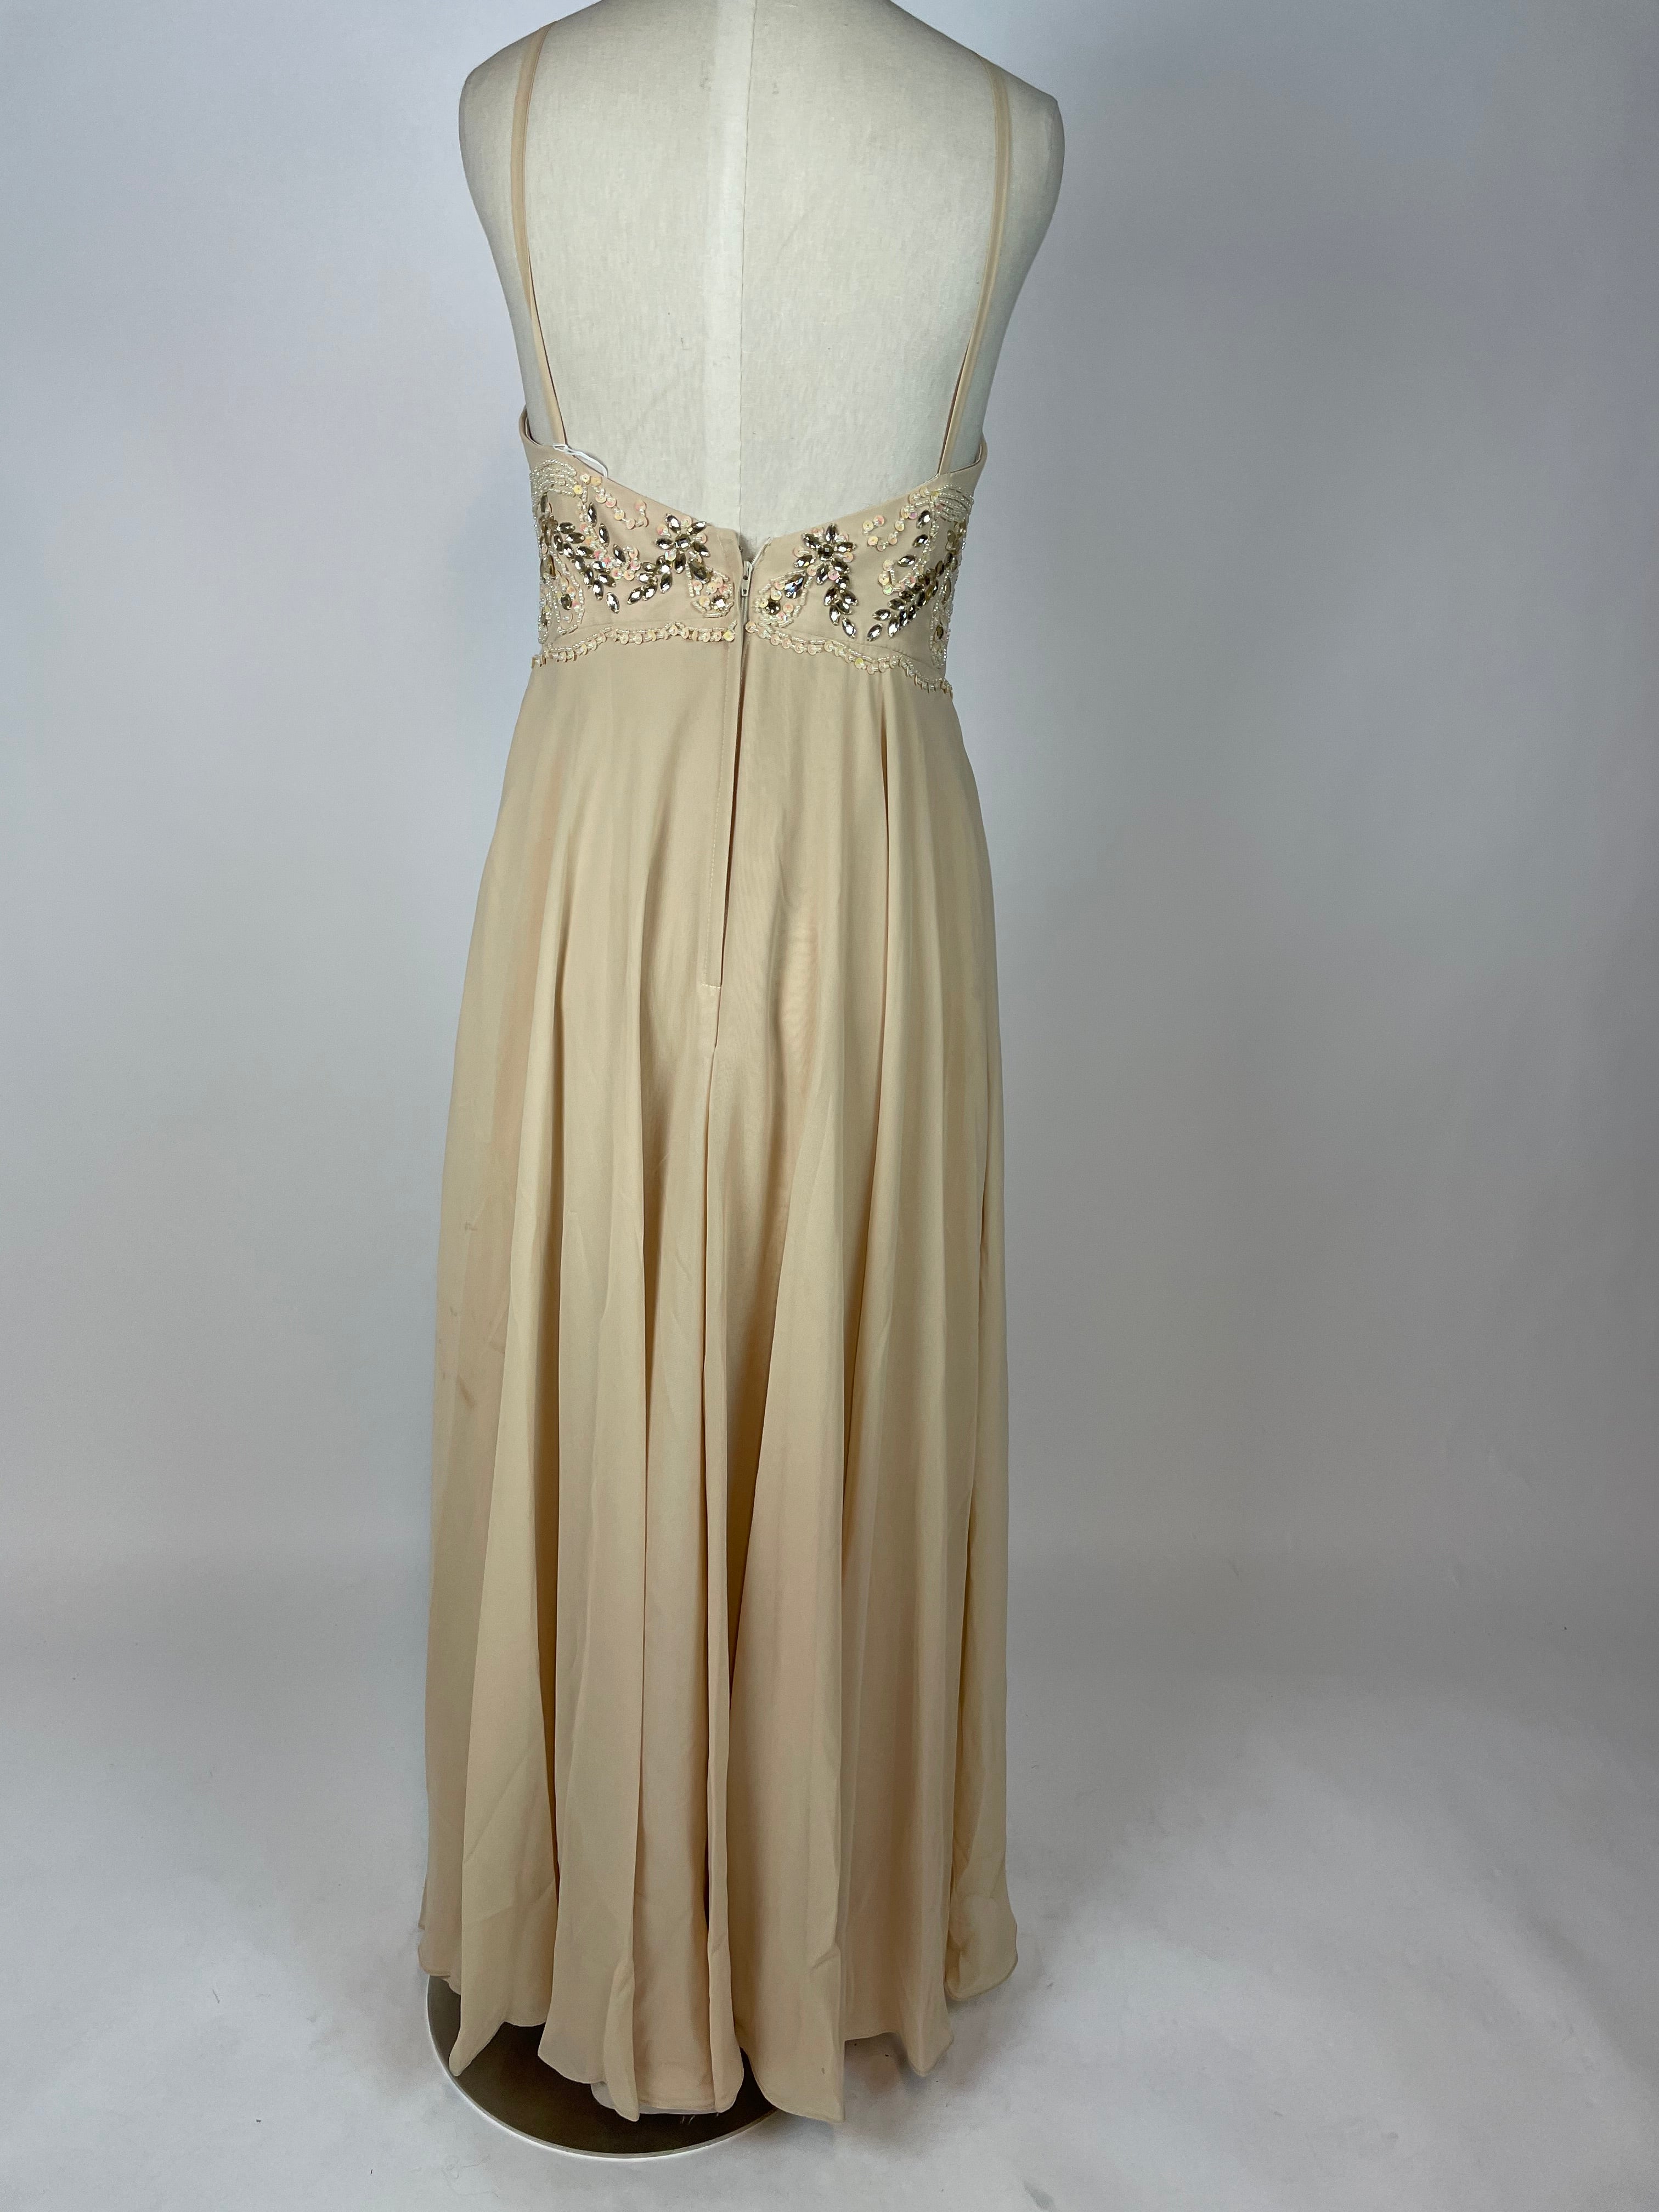 Beige Evening Gown  Size 4/6 #976